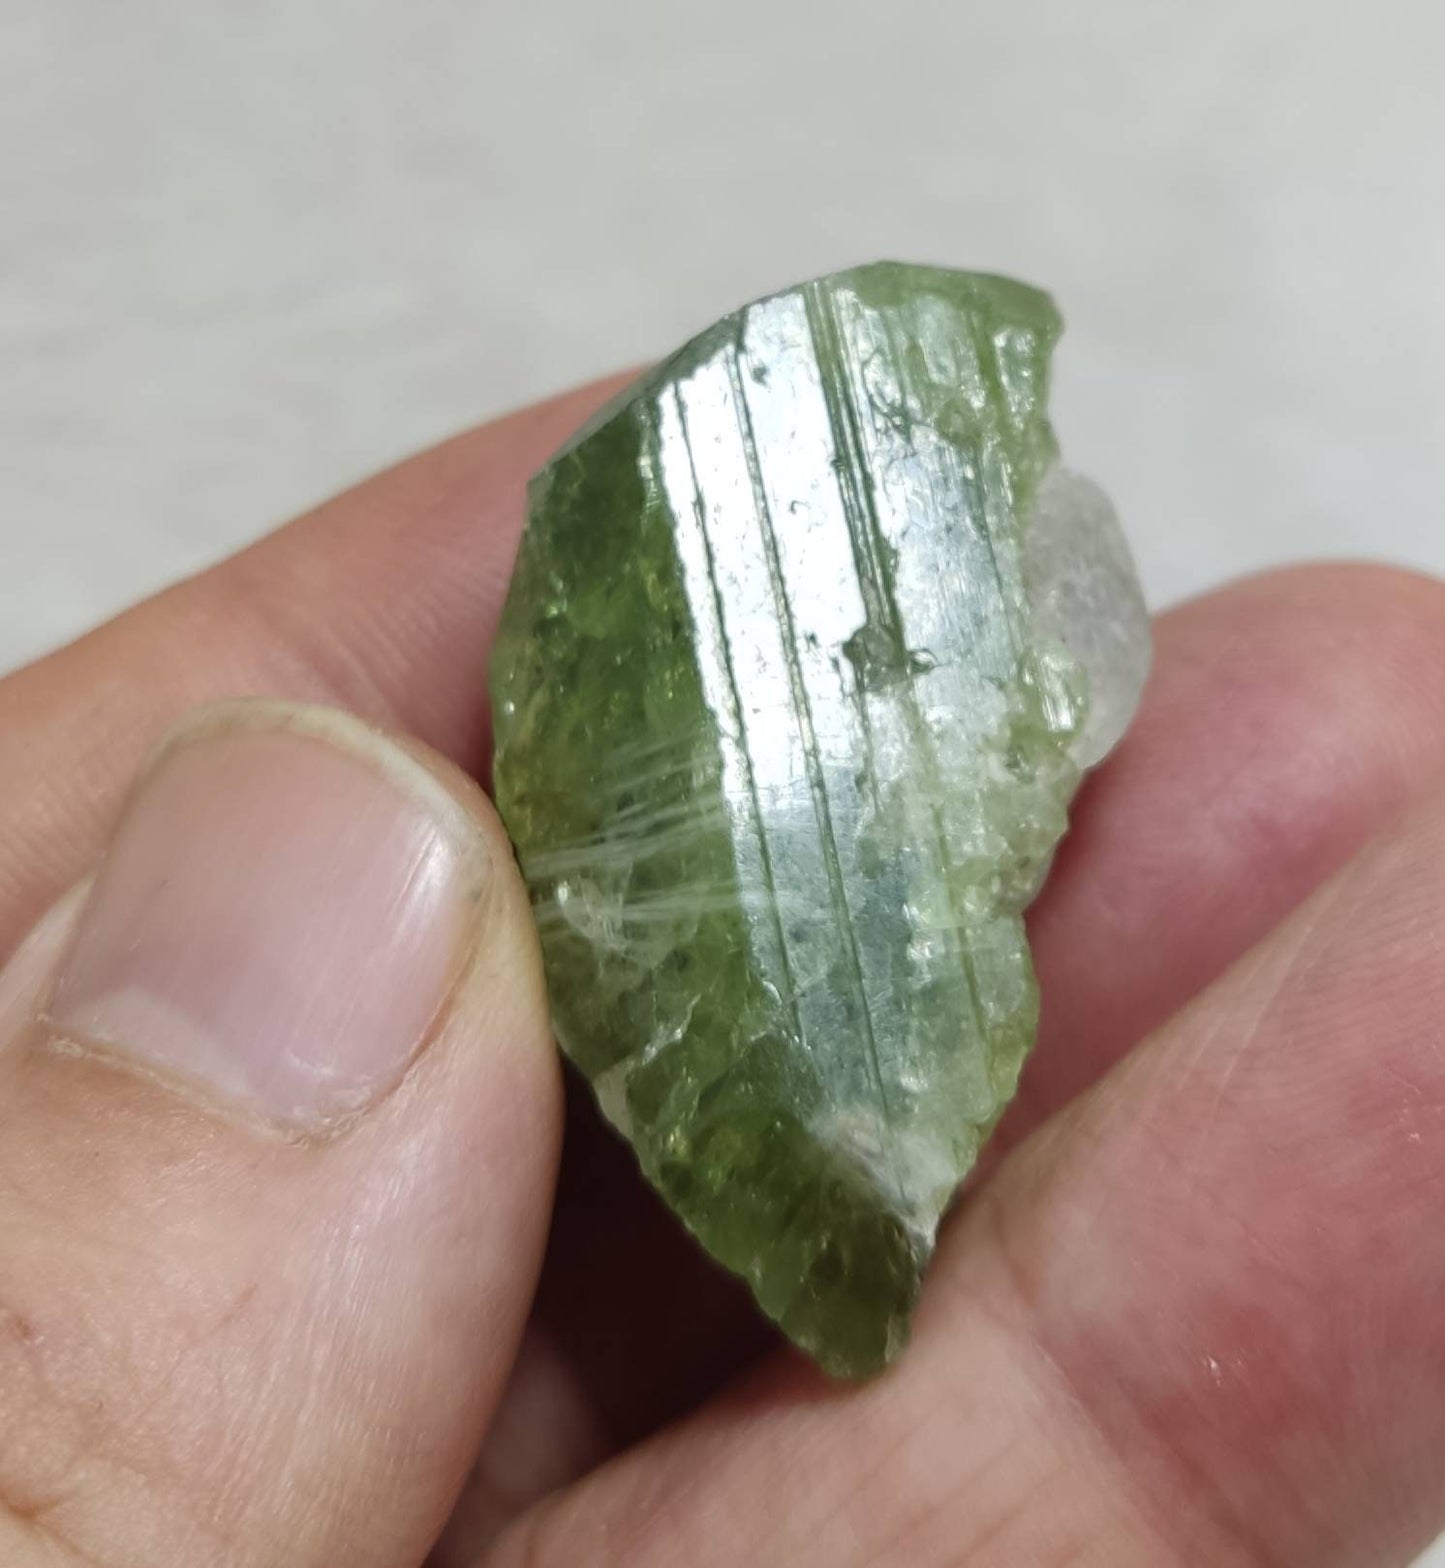 Diopside crystal with hackmanite 19 grams